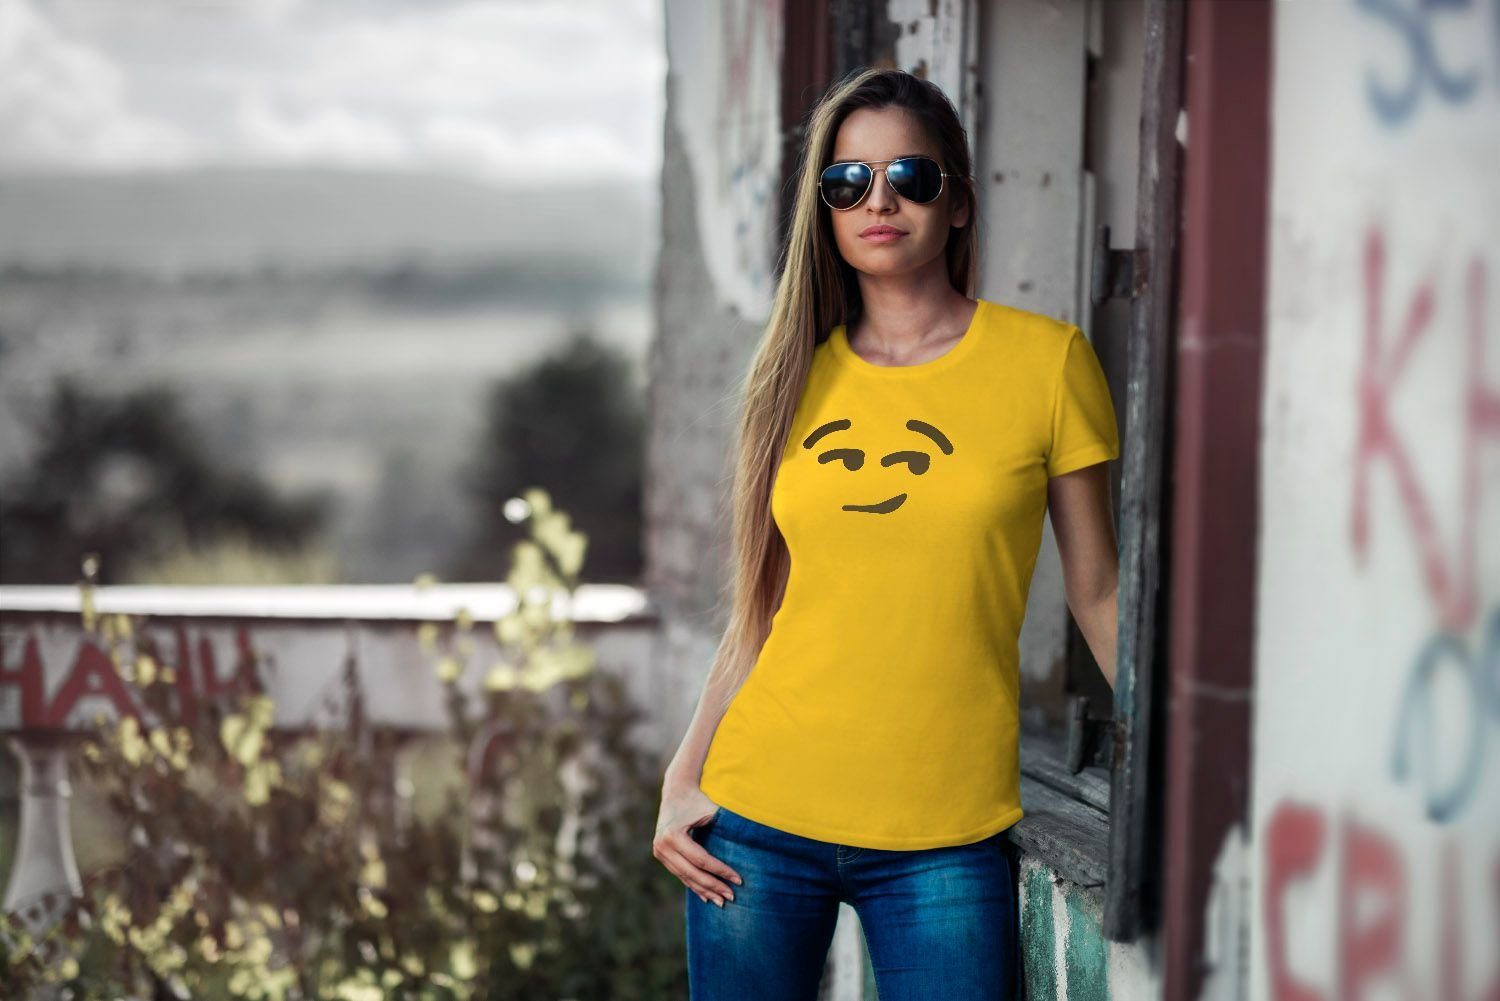 Moonworks® Print gelb Karneval mit Print-Shirt Smirk JGA MoonWorks T-Shirt Junggesellenabschied Fasching Damen Emoticon lustig Fun-Shirt Gruppenkostüm